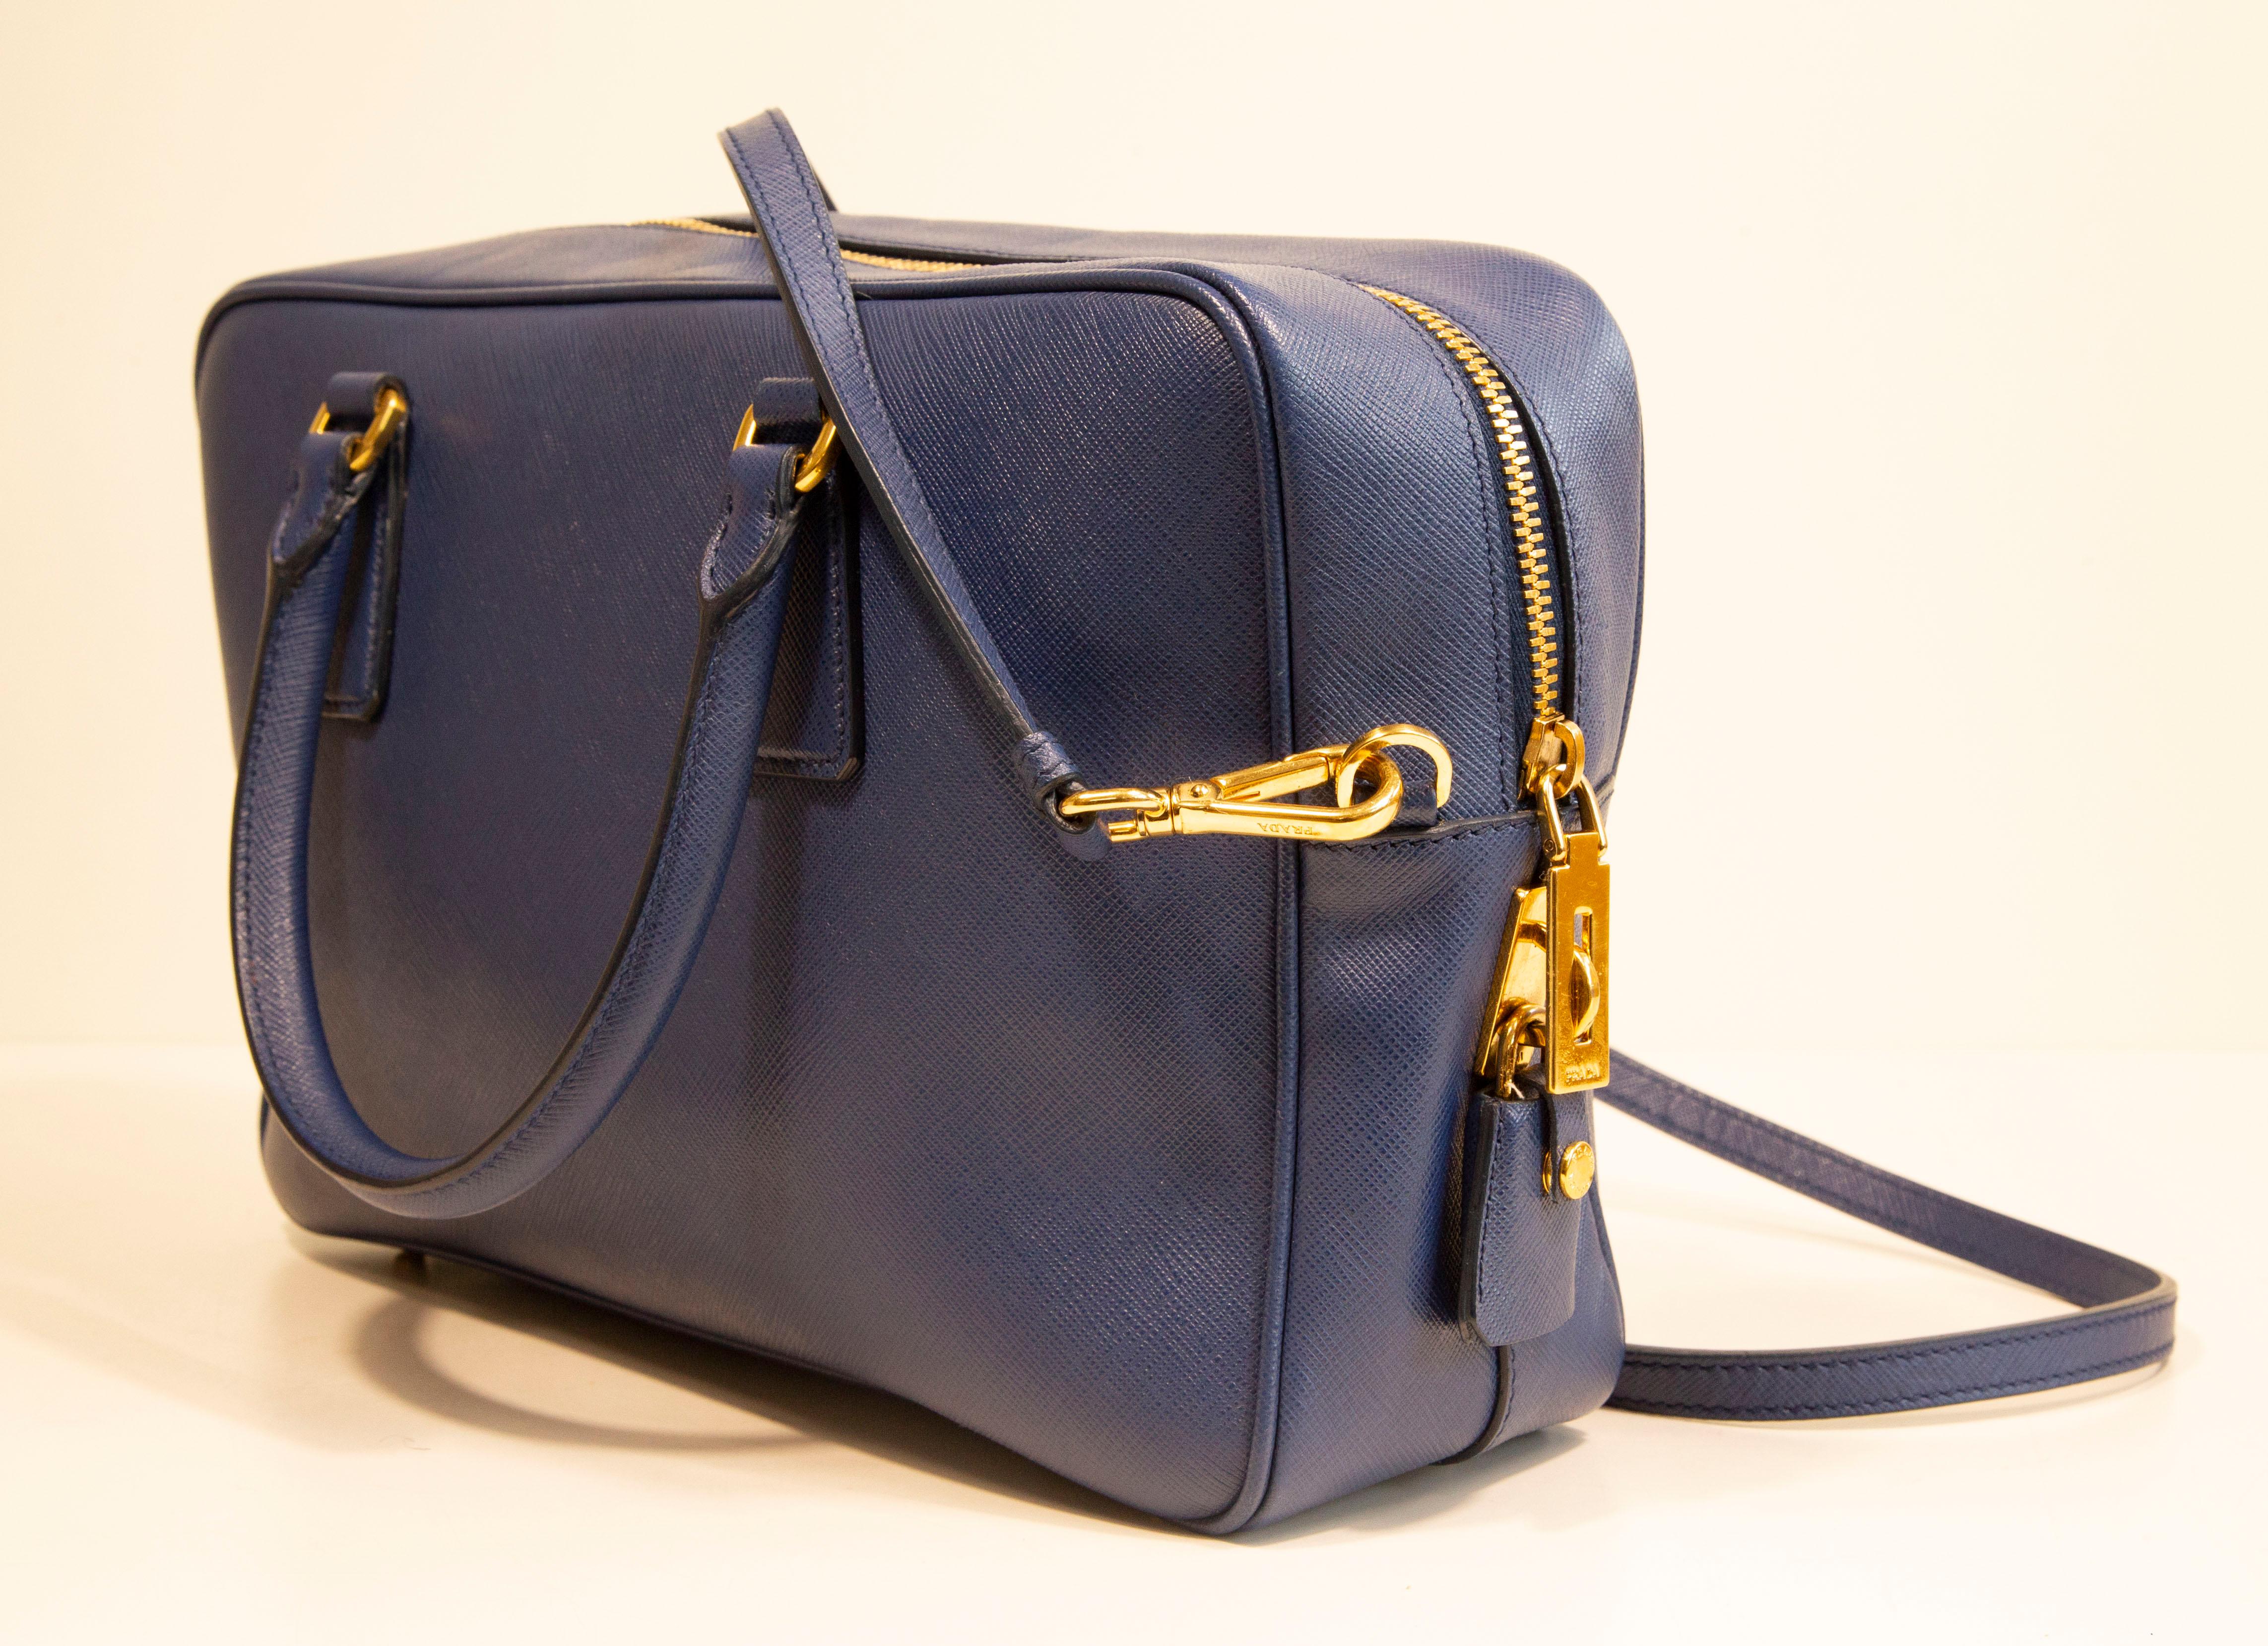  Prada Galleria Two Way Bag in Blue Saffiano Leather 1